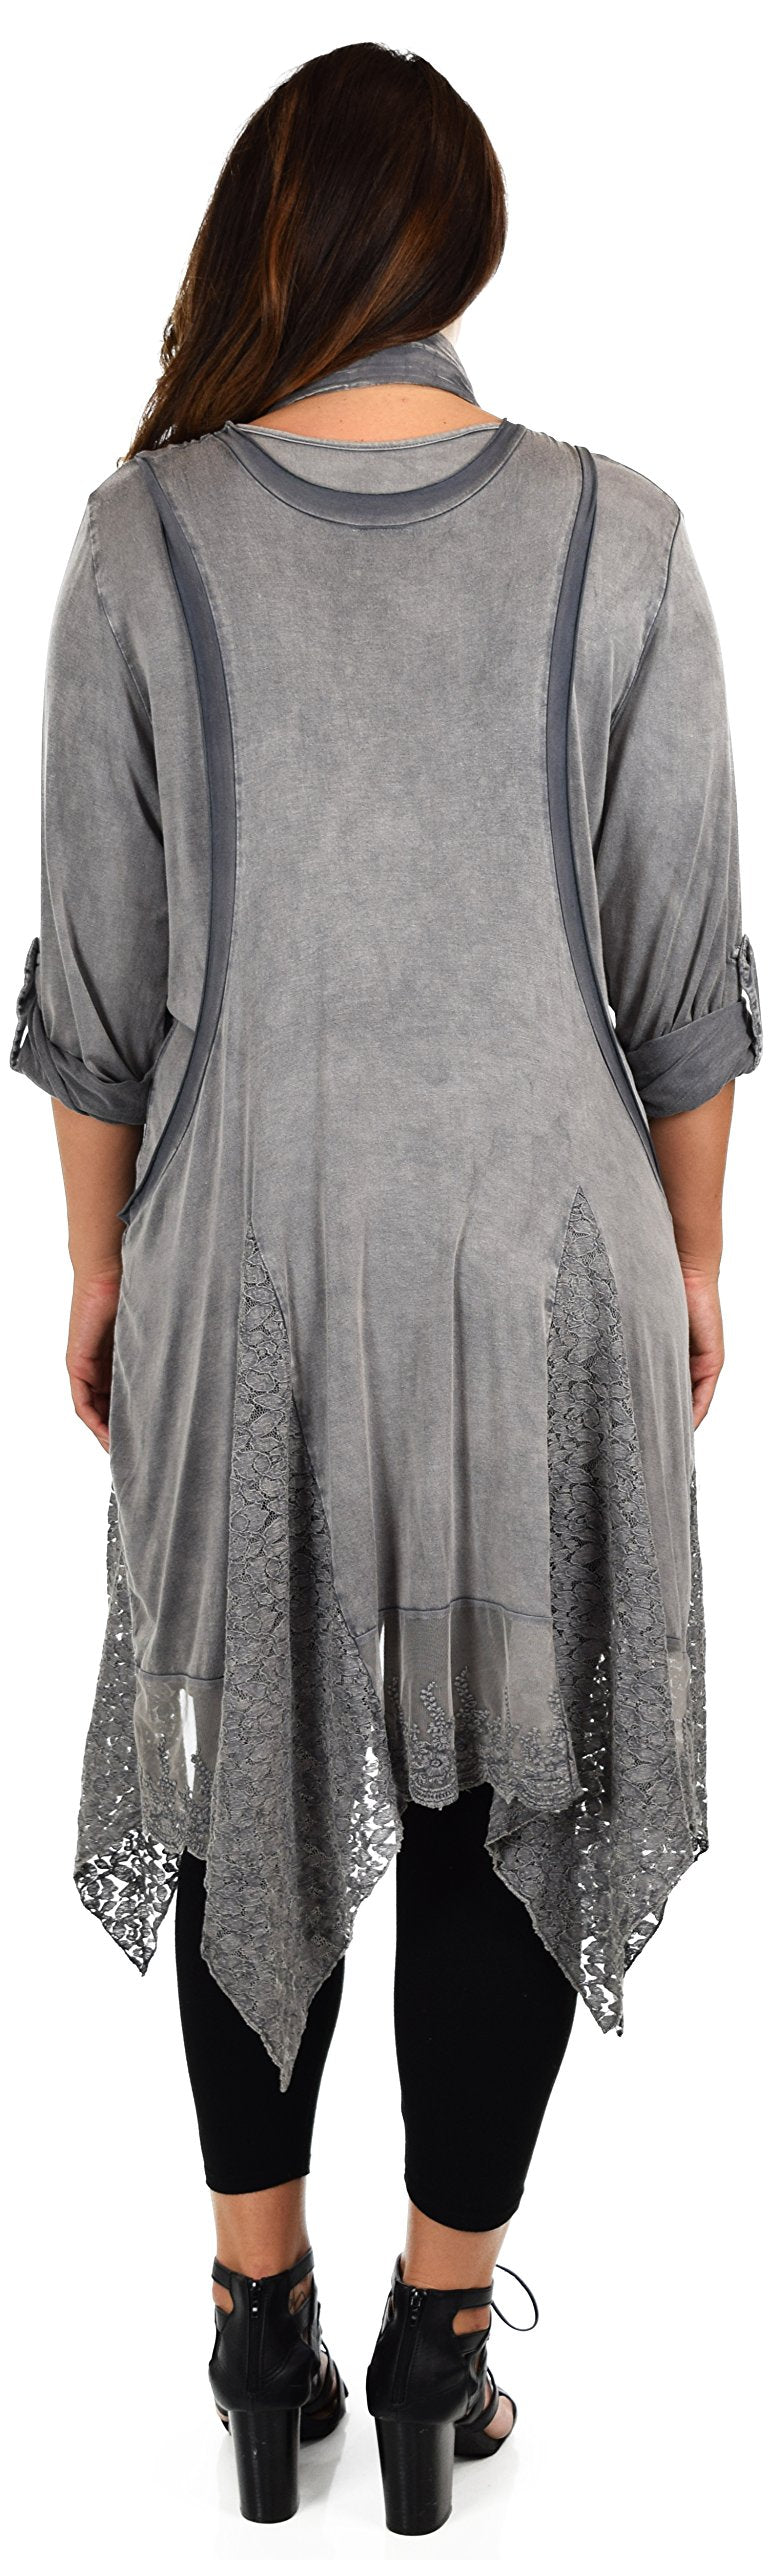 Dare2bStylish Women Plus Size Asymmetrical Lace Tunic Blouse Top Set with Scarf, 3 pc tunic set, Plus size tunic set